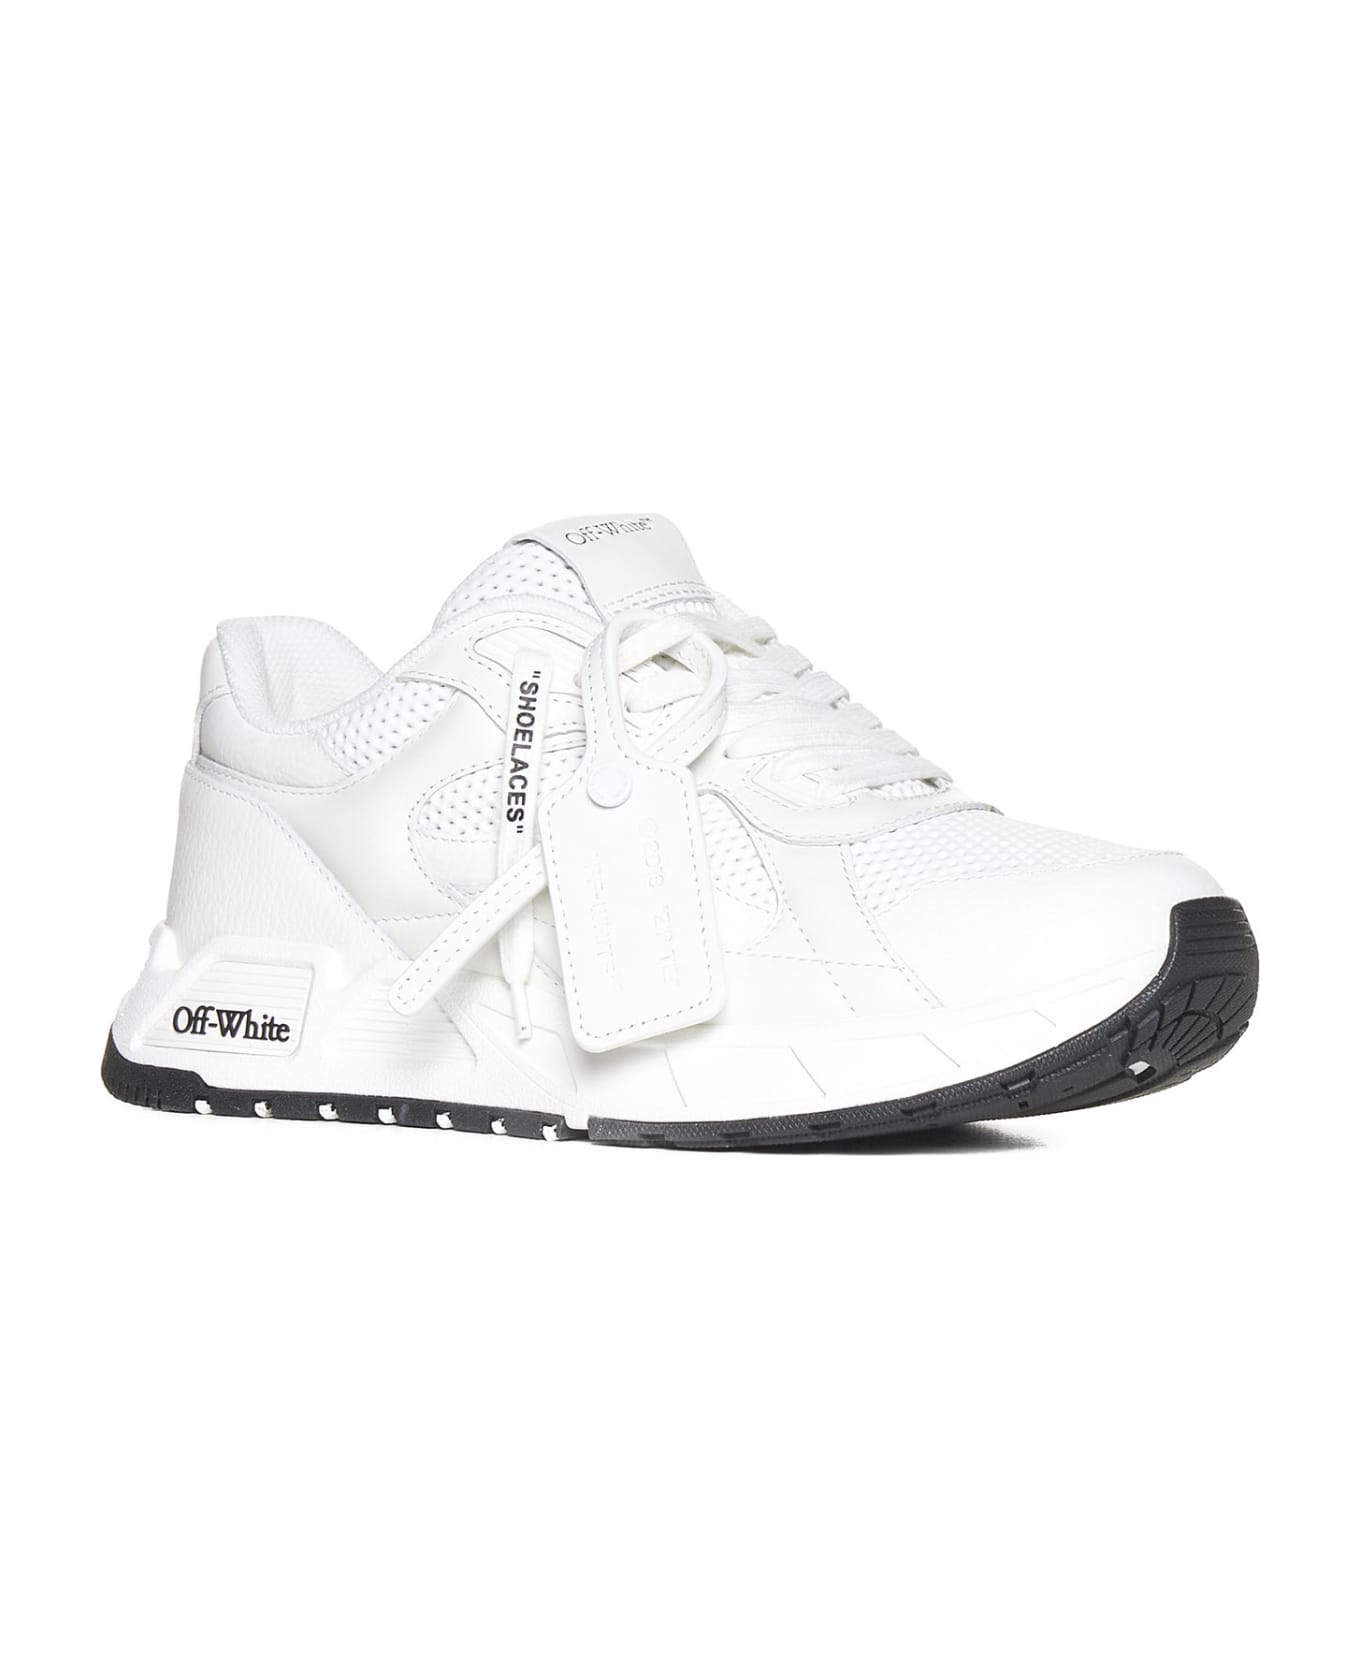 Off-White Kick Off Sneakers - White スニーカー